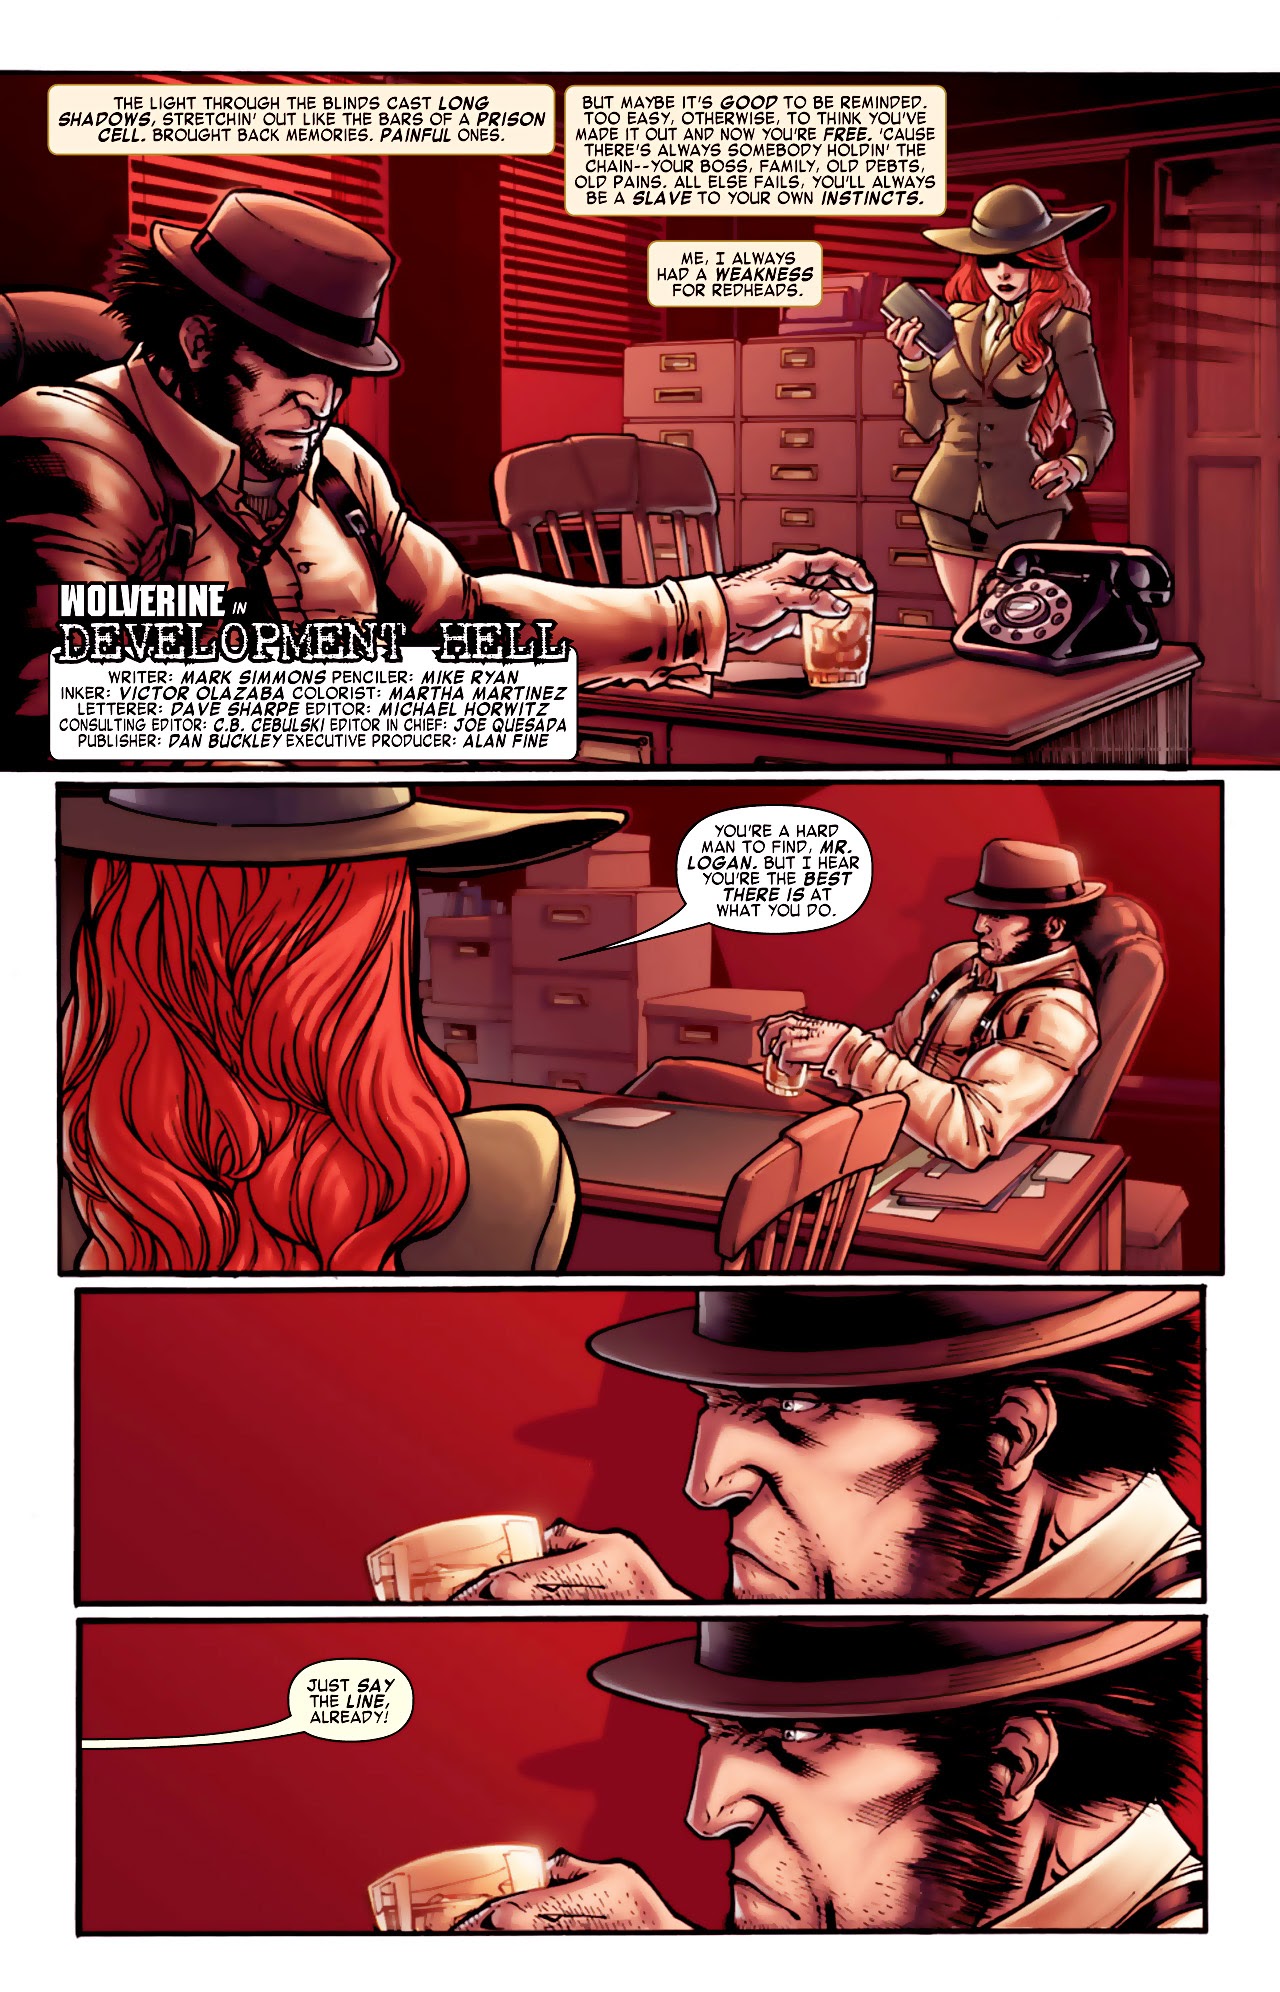 Read online Wolverine: Development Hell comic -  Issue # Full - 2